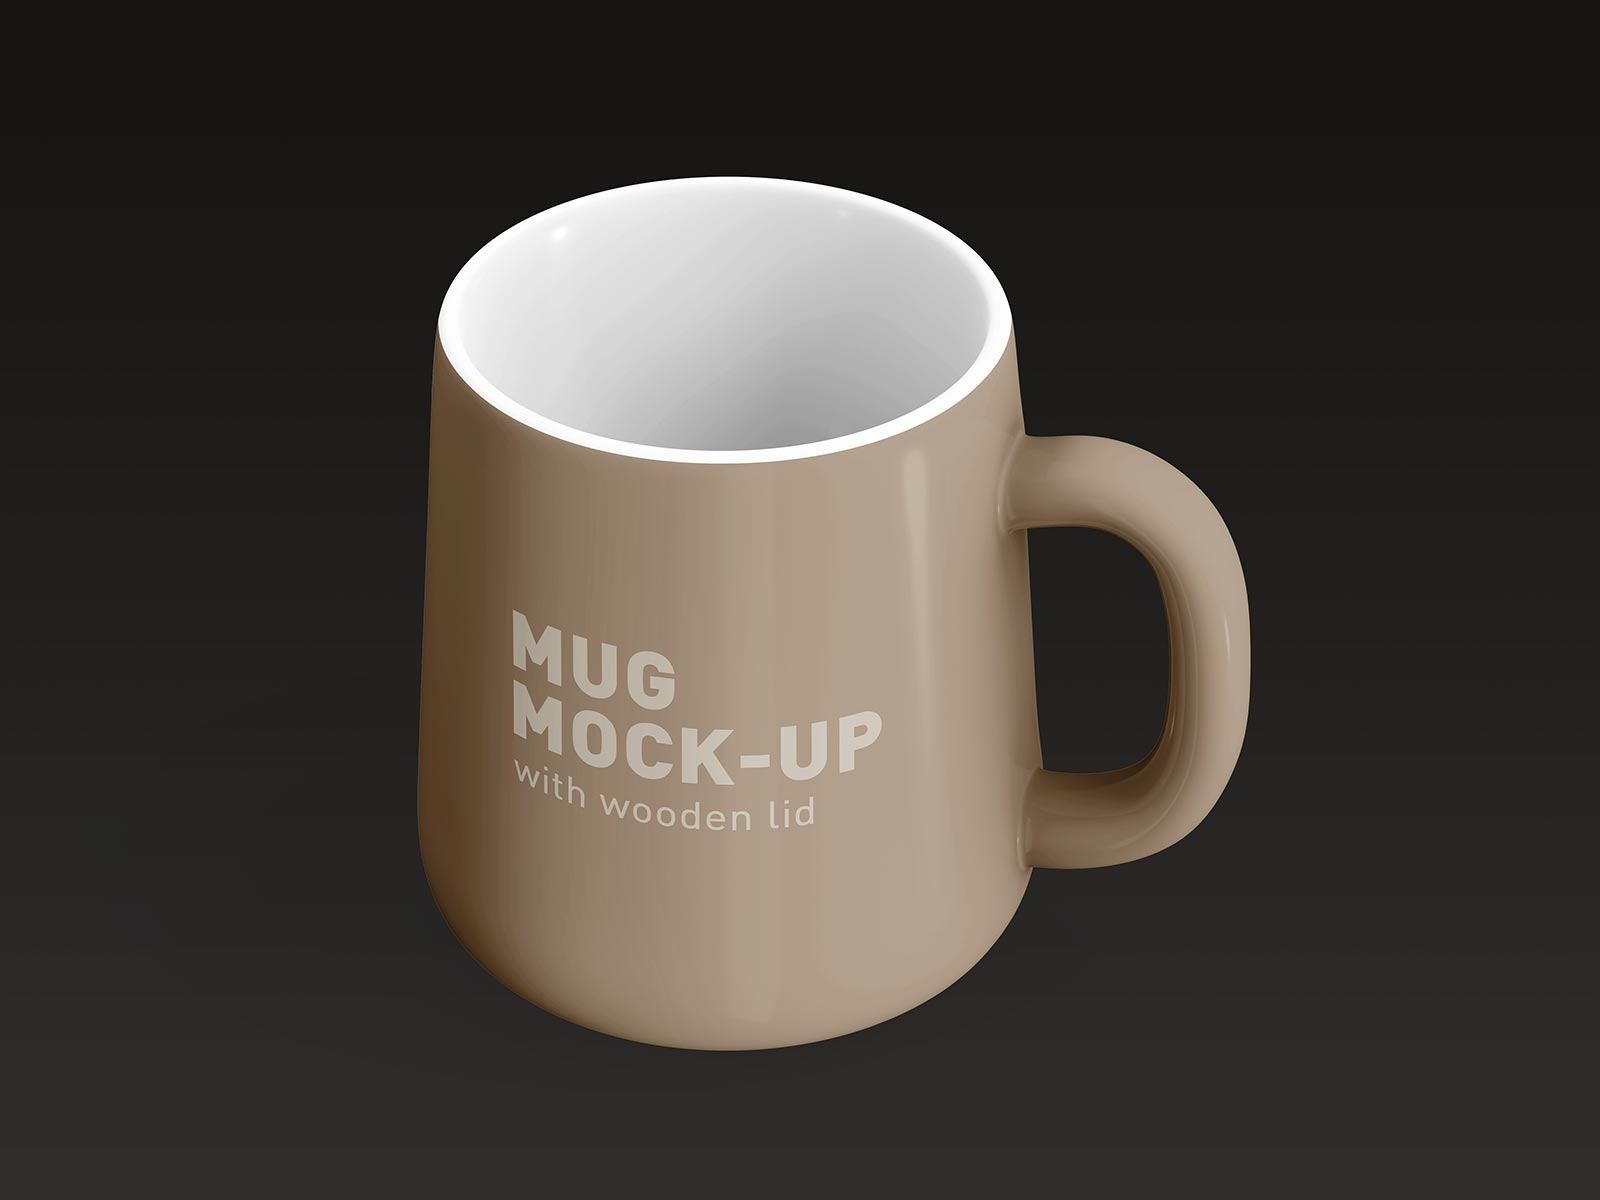 Free Wooden Lid Mug Mockup PSD Set